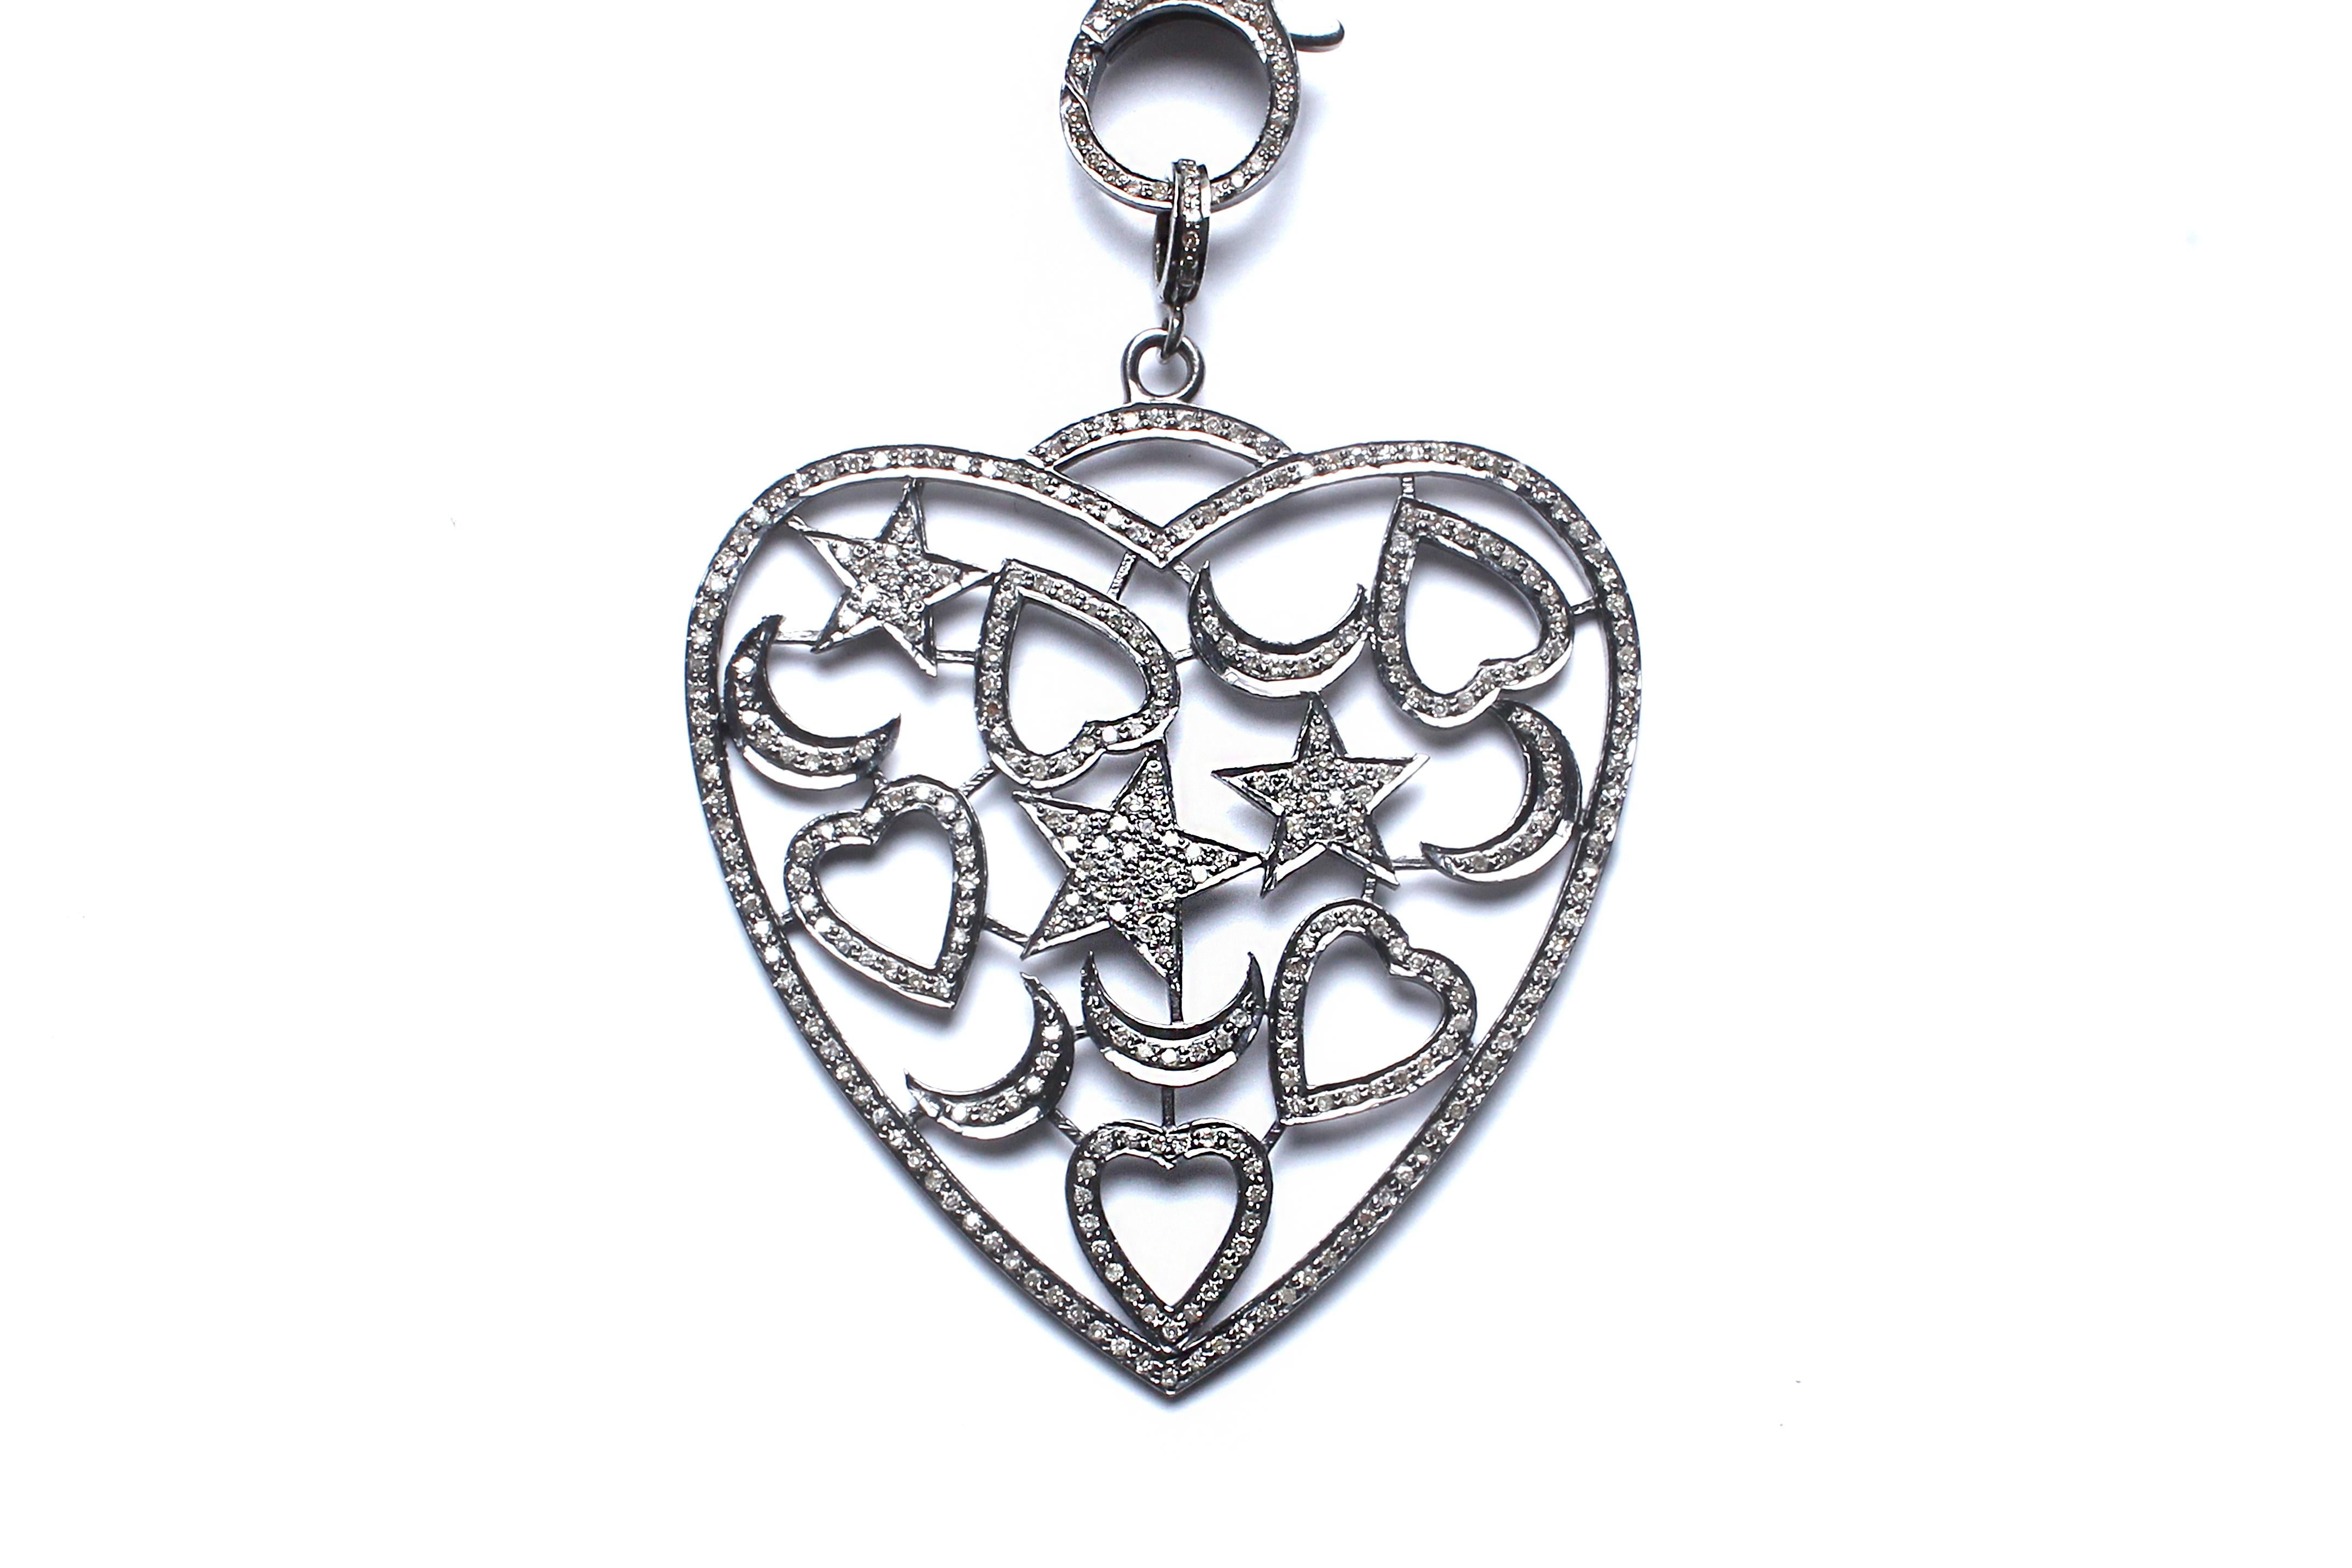 Contemporary Clarissa Bronfman Garnet, Rose Cut Diamond Heart Pendant Beaded Rosary Necklace